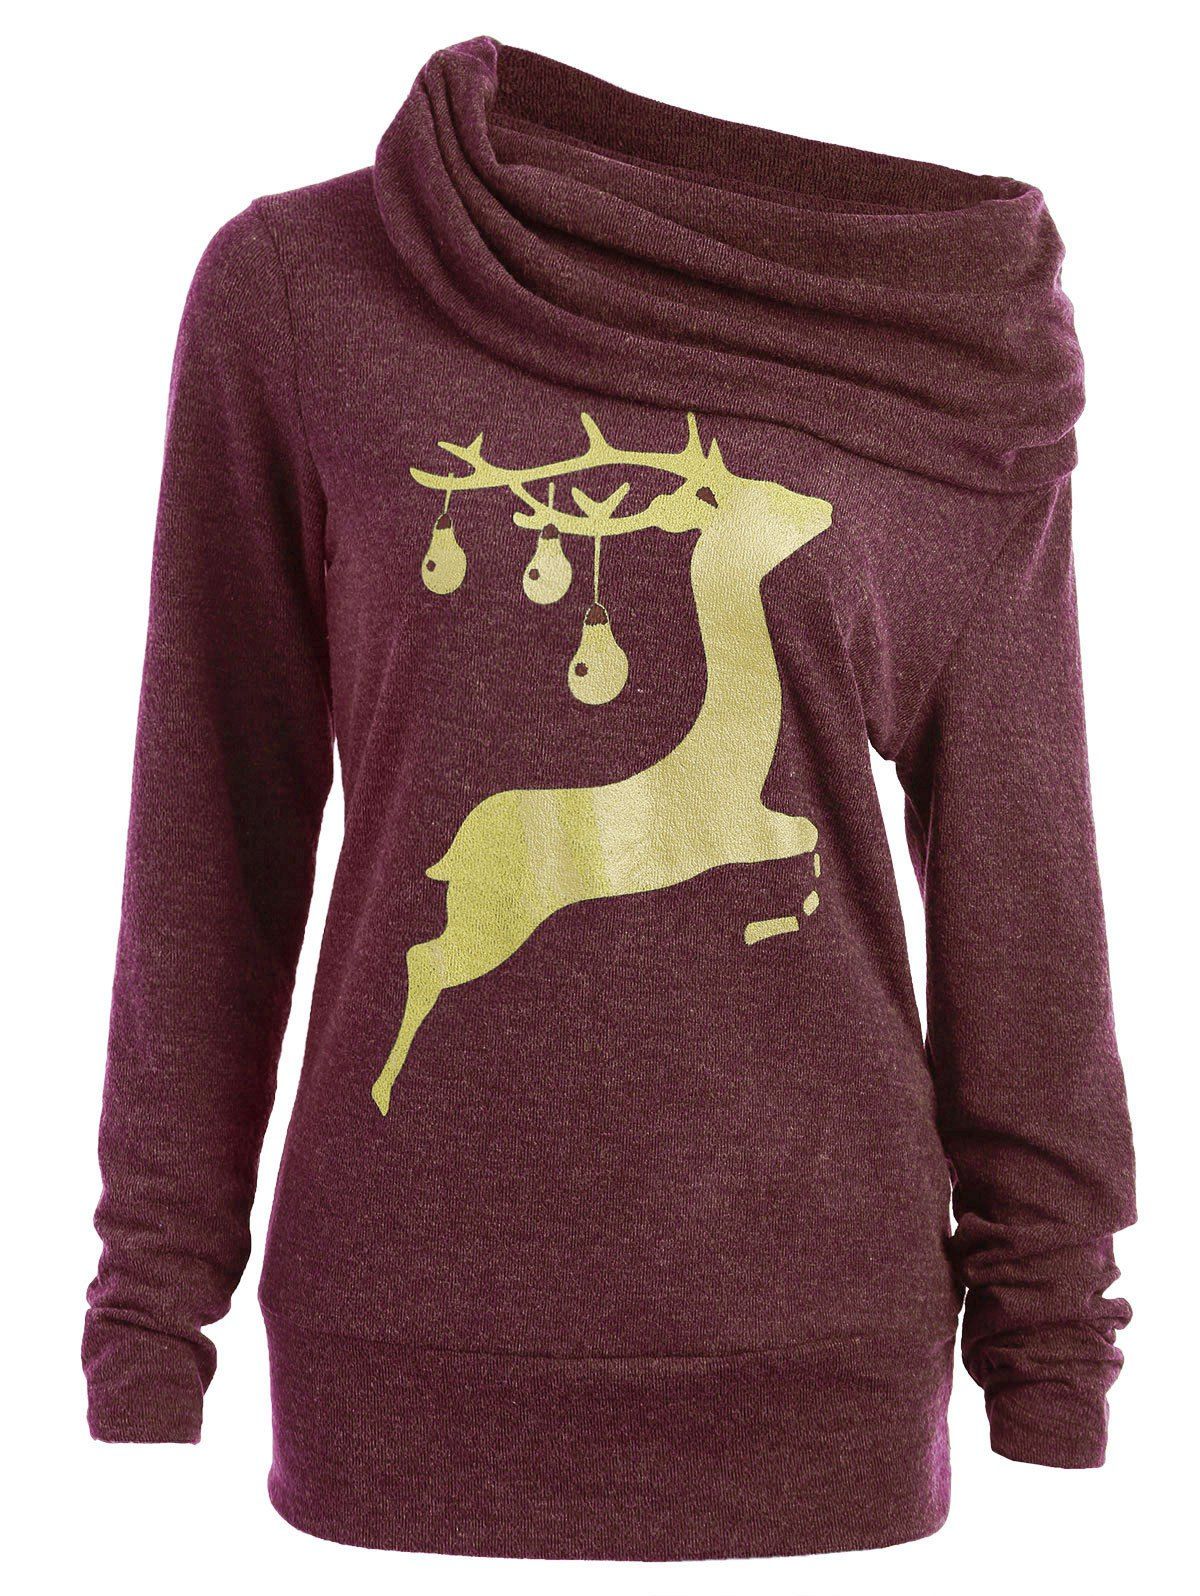 Cowl Neck Elk Deer Print Sweatshirt - WINE RED S